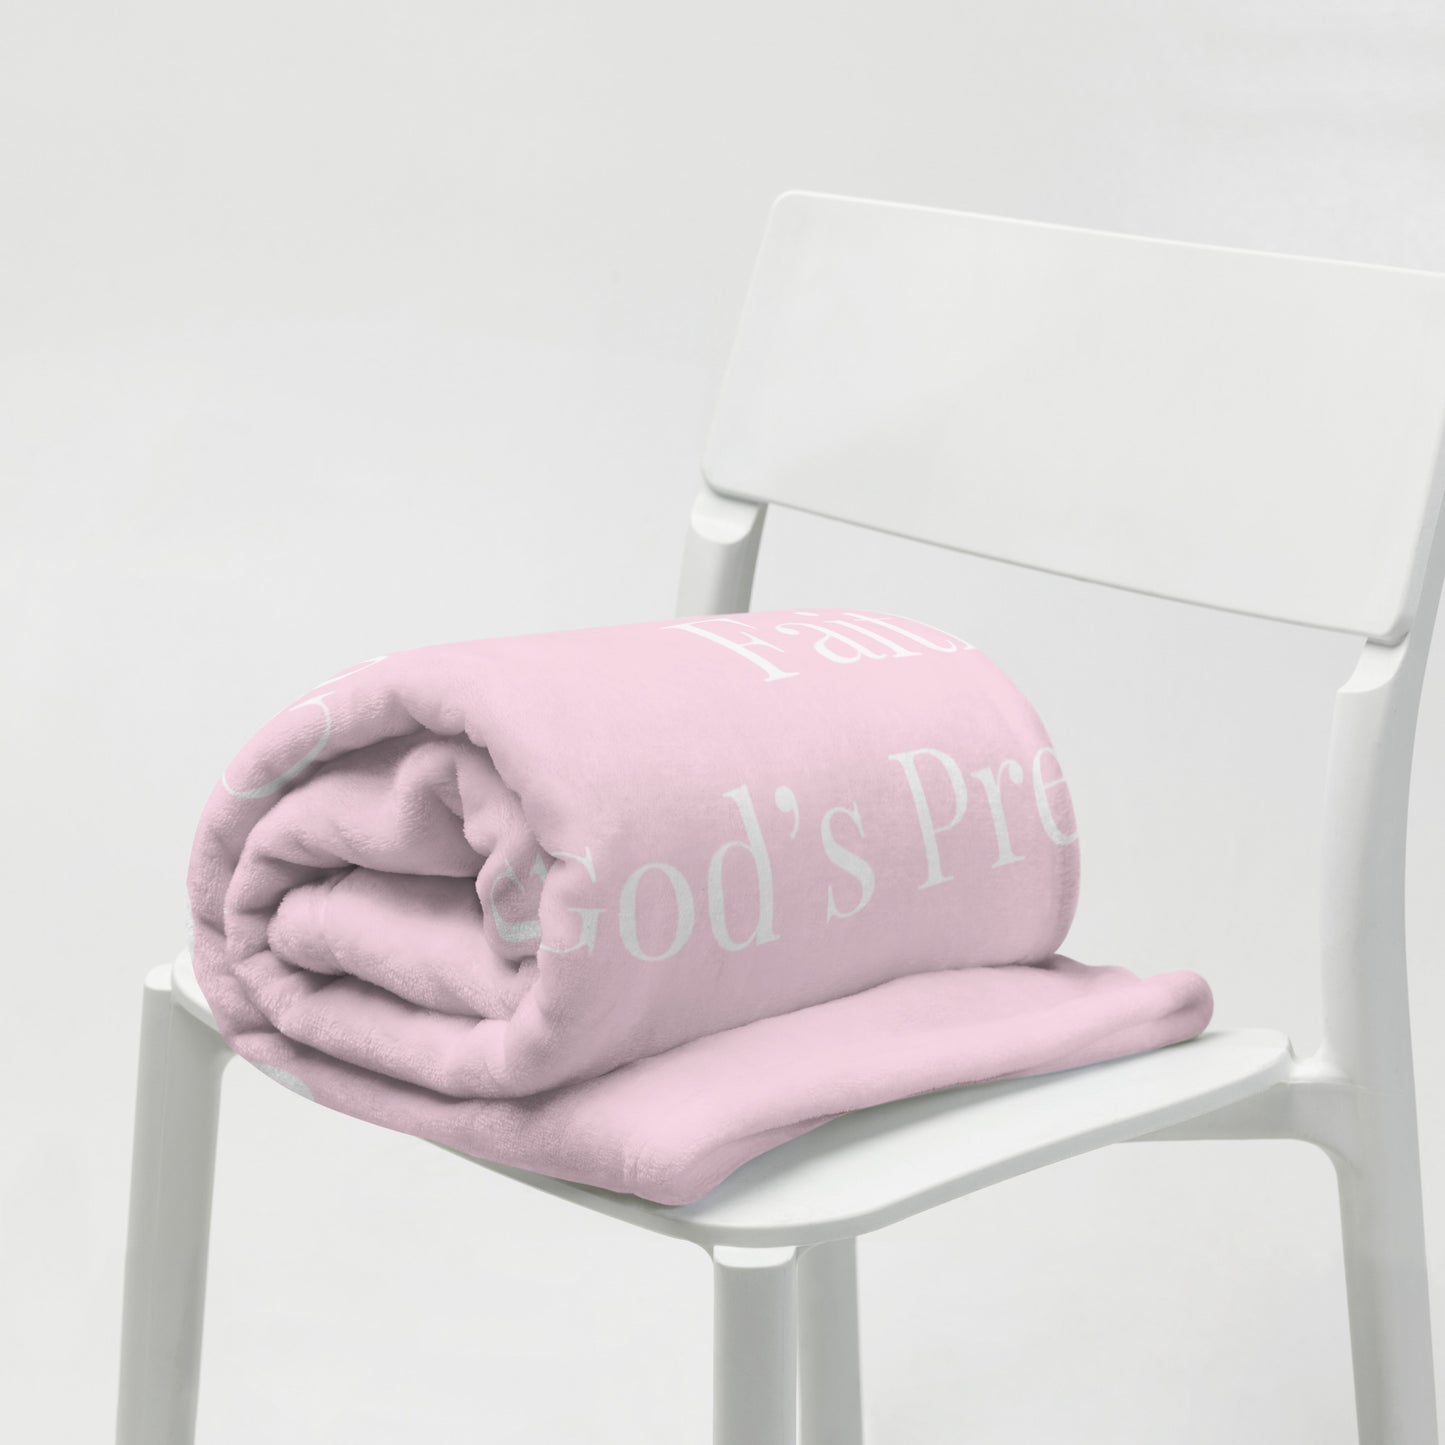 Prayer collection inspirational throw blanket - Light Pink/White